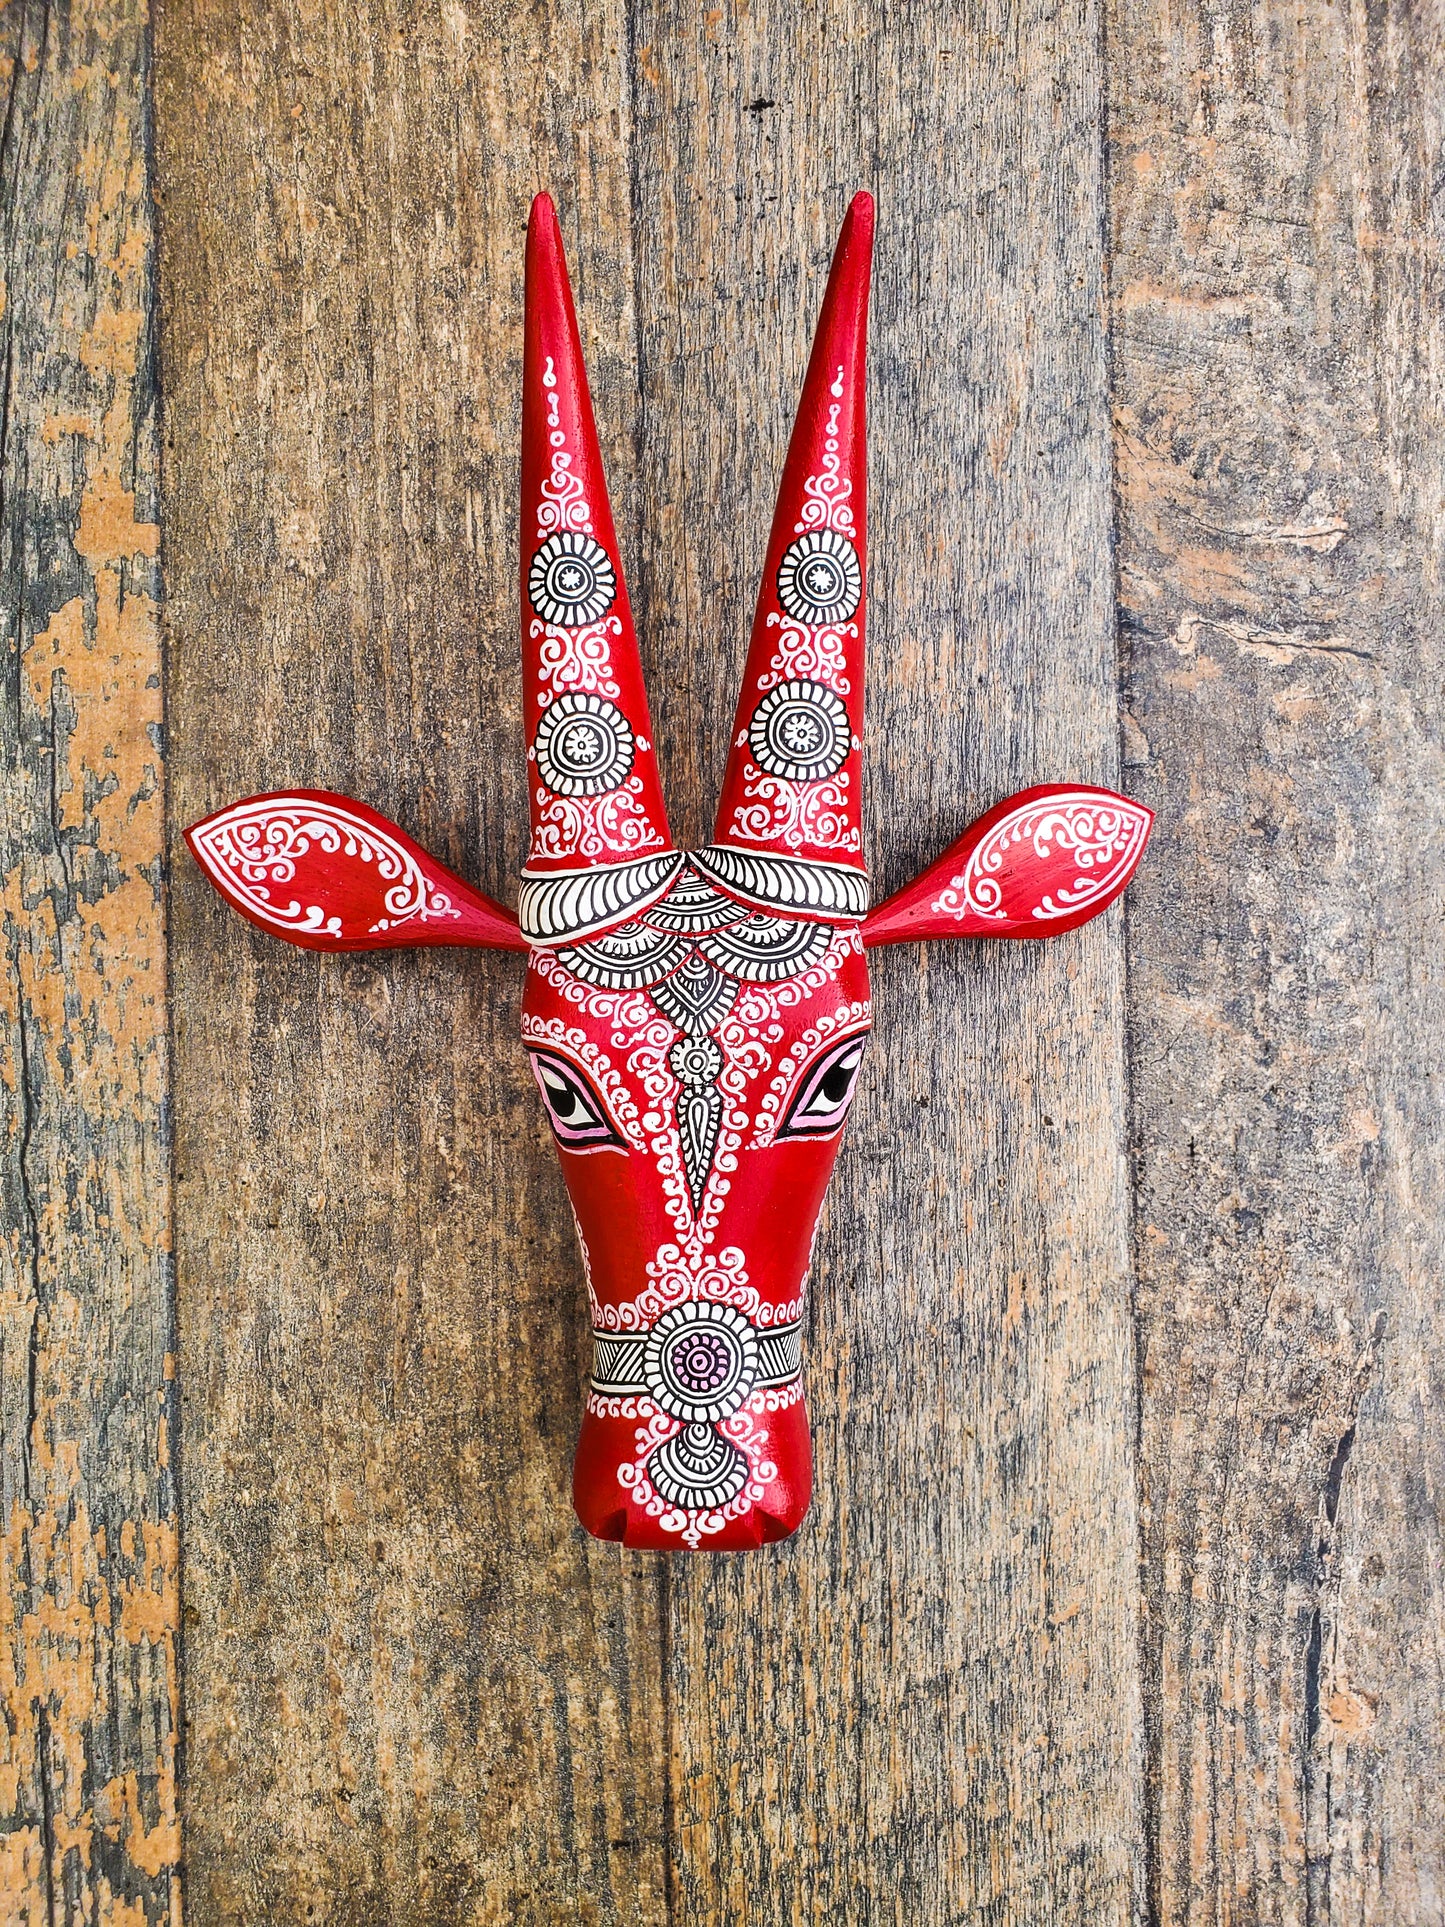 Red and White Pattachitra handpainted Bull Head